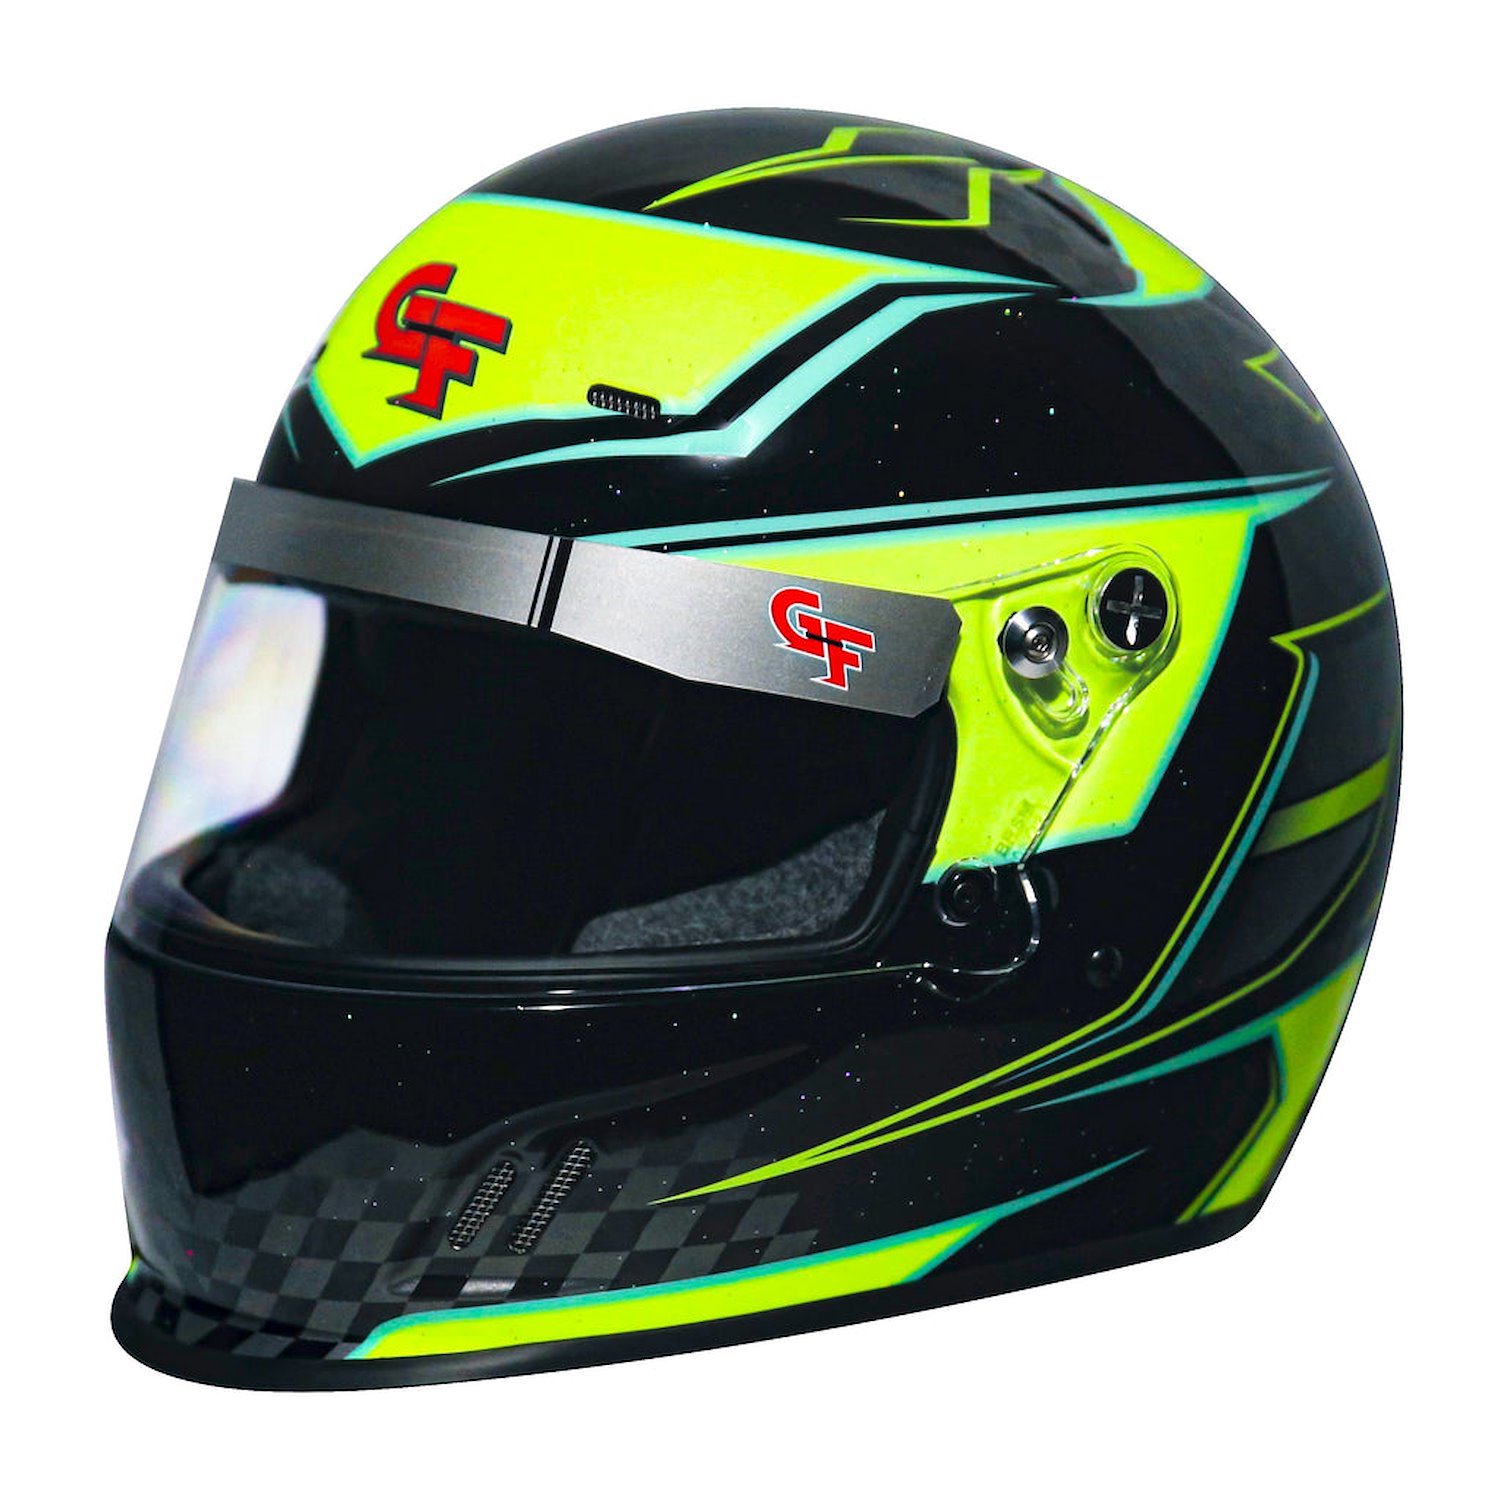 13402SMLYL Helmet, CMR Graphics, Small, Black/Yellow